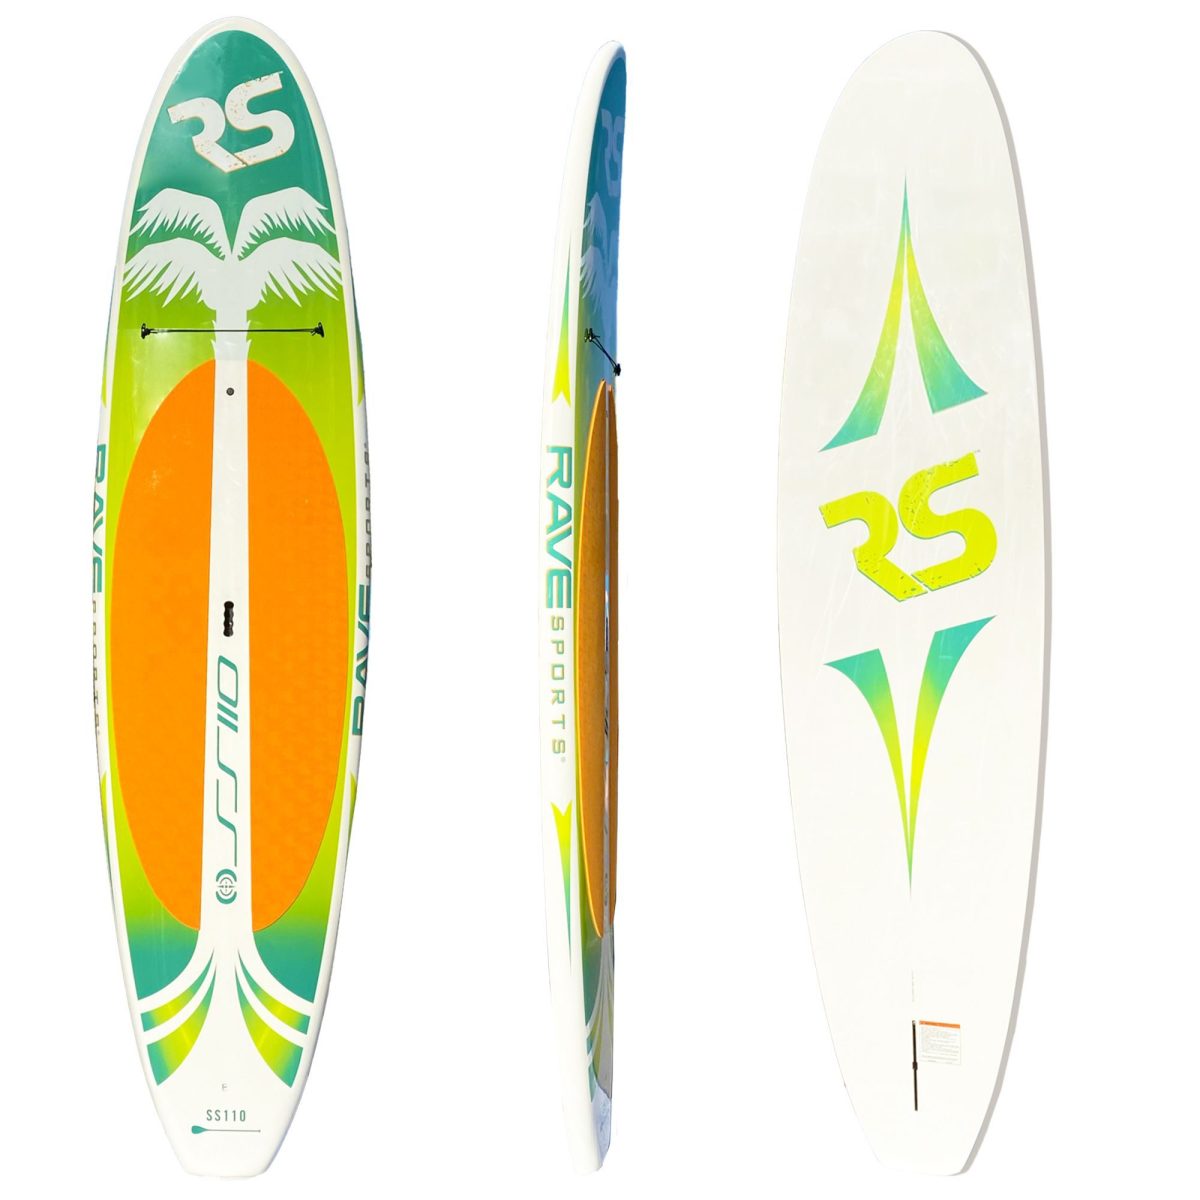 RAVE Sports Shoreline Palm Series SS110 SUP Stand-Up Paddleboard - Kiwi Palm